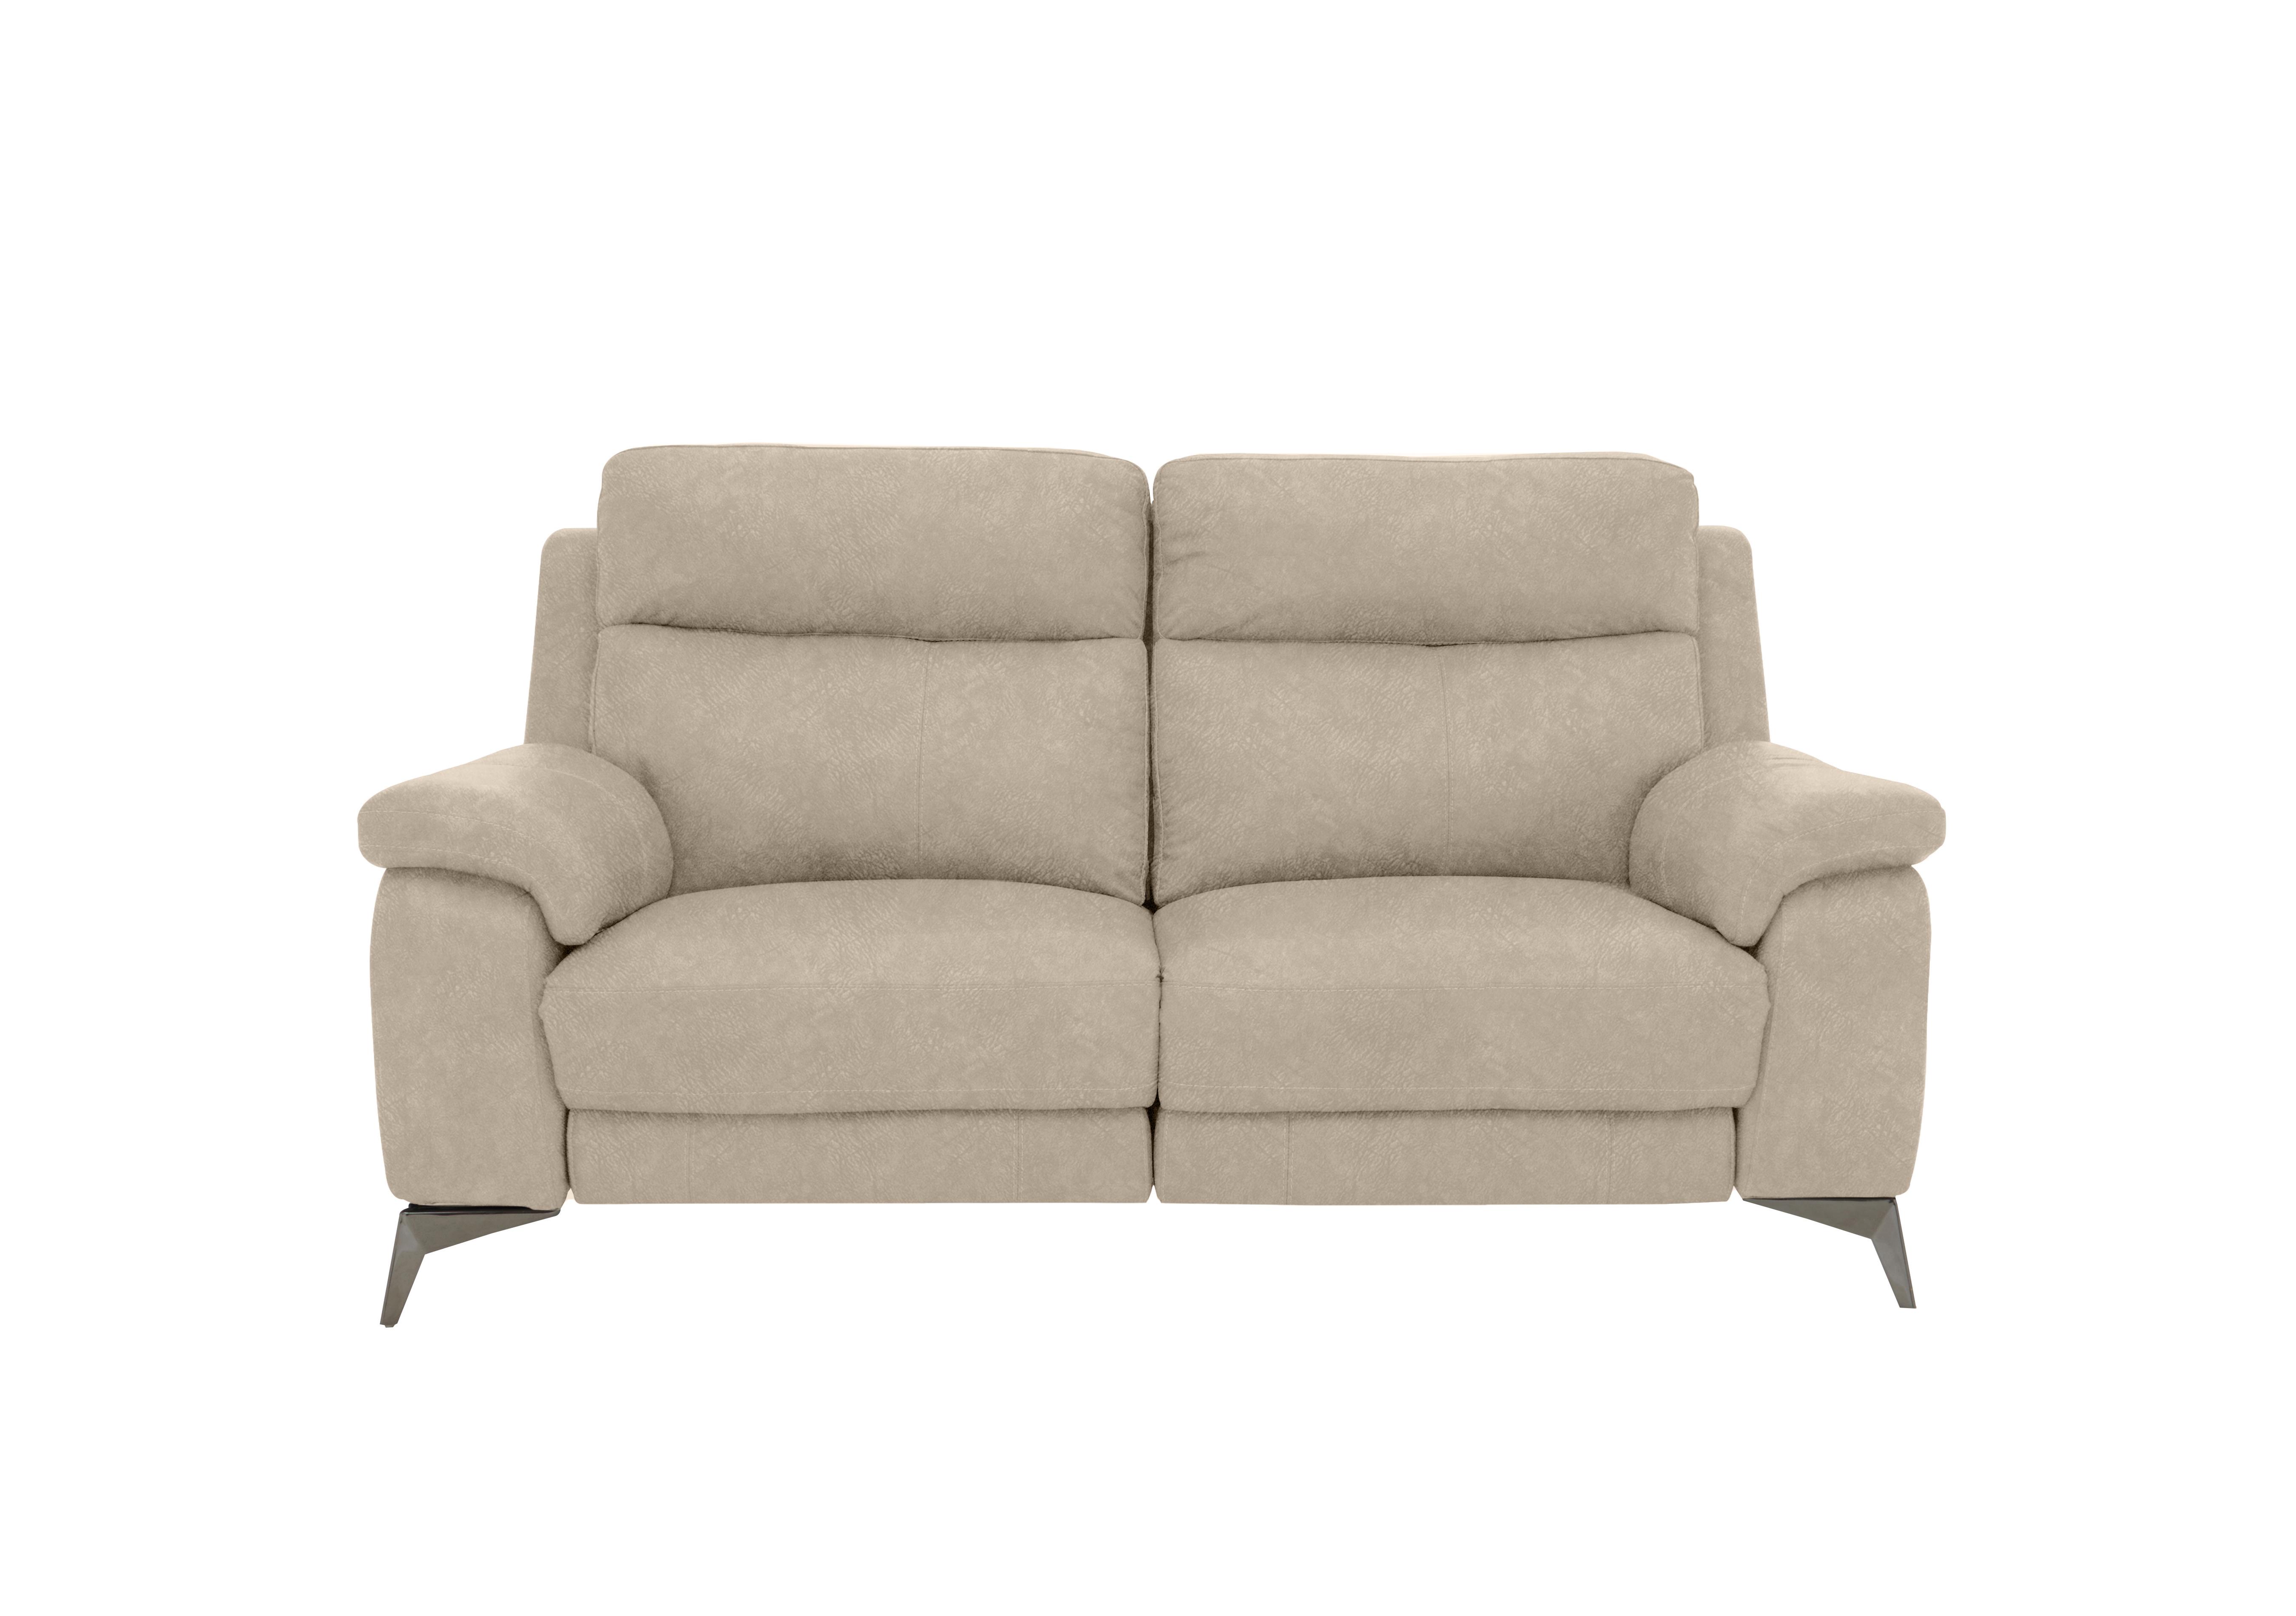 Missouri 2 Seater Fabric Sofa in Bfa-Bnn-R26 Fv2 Cream on Furniture Village